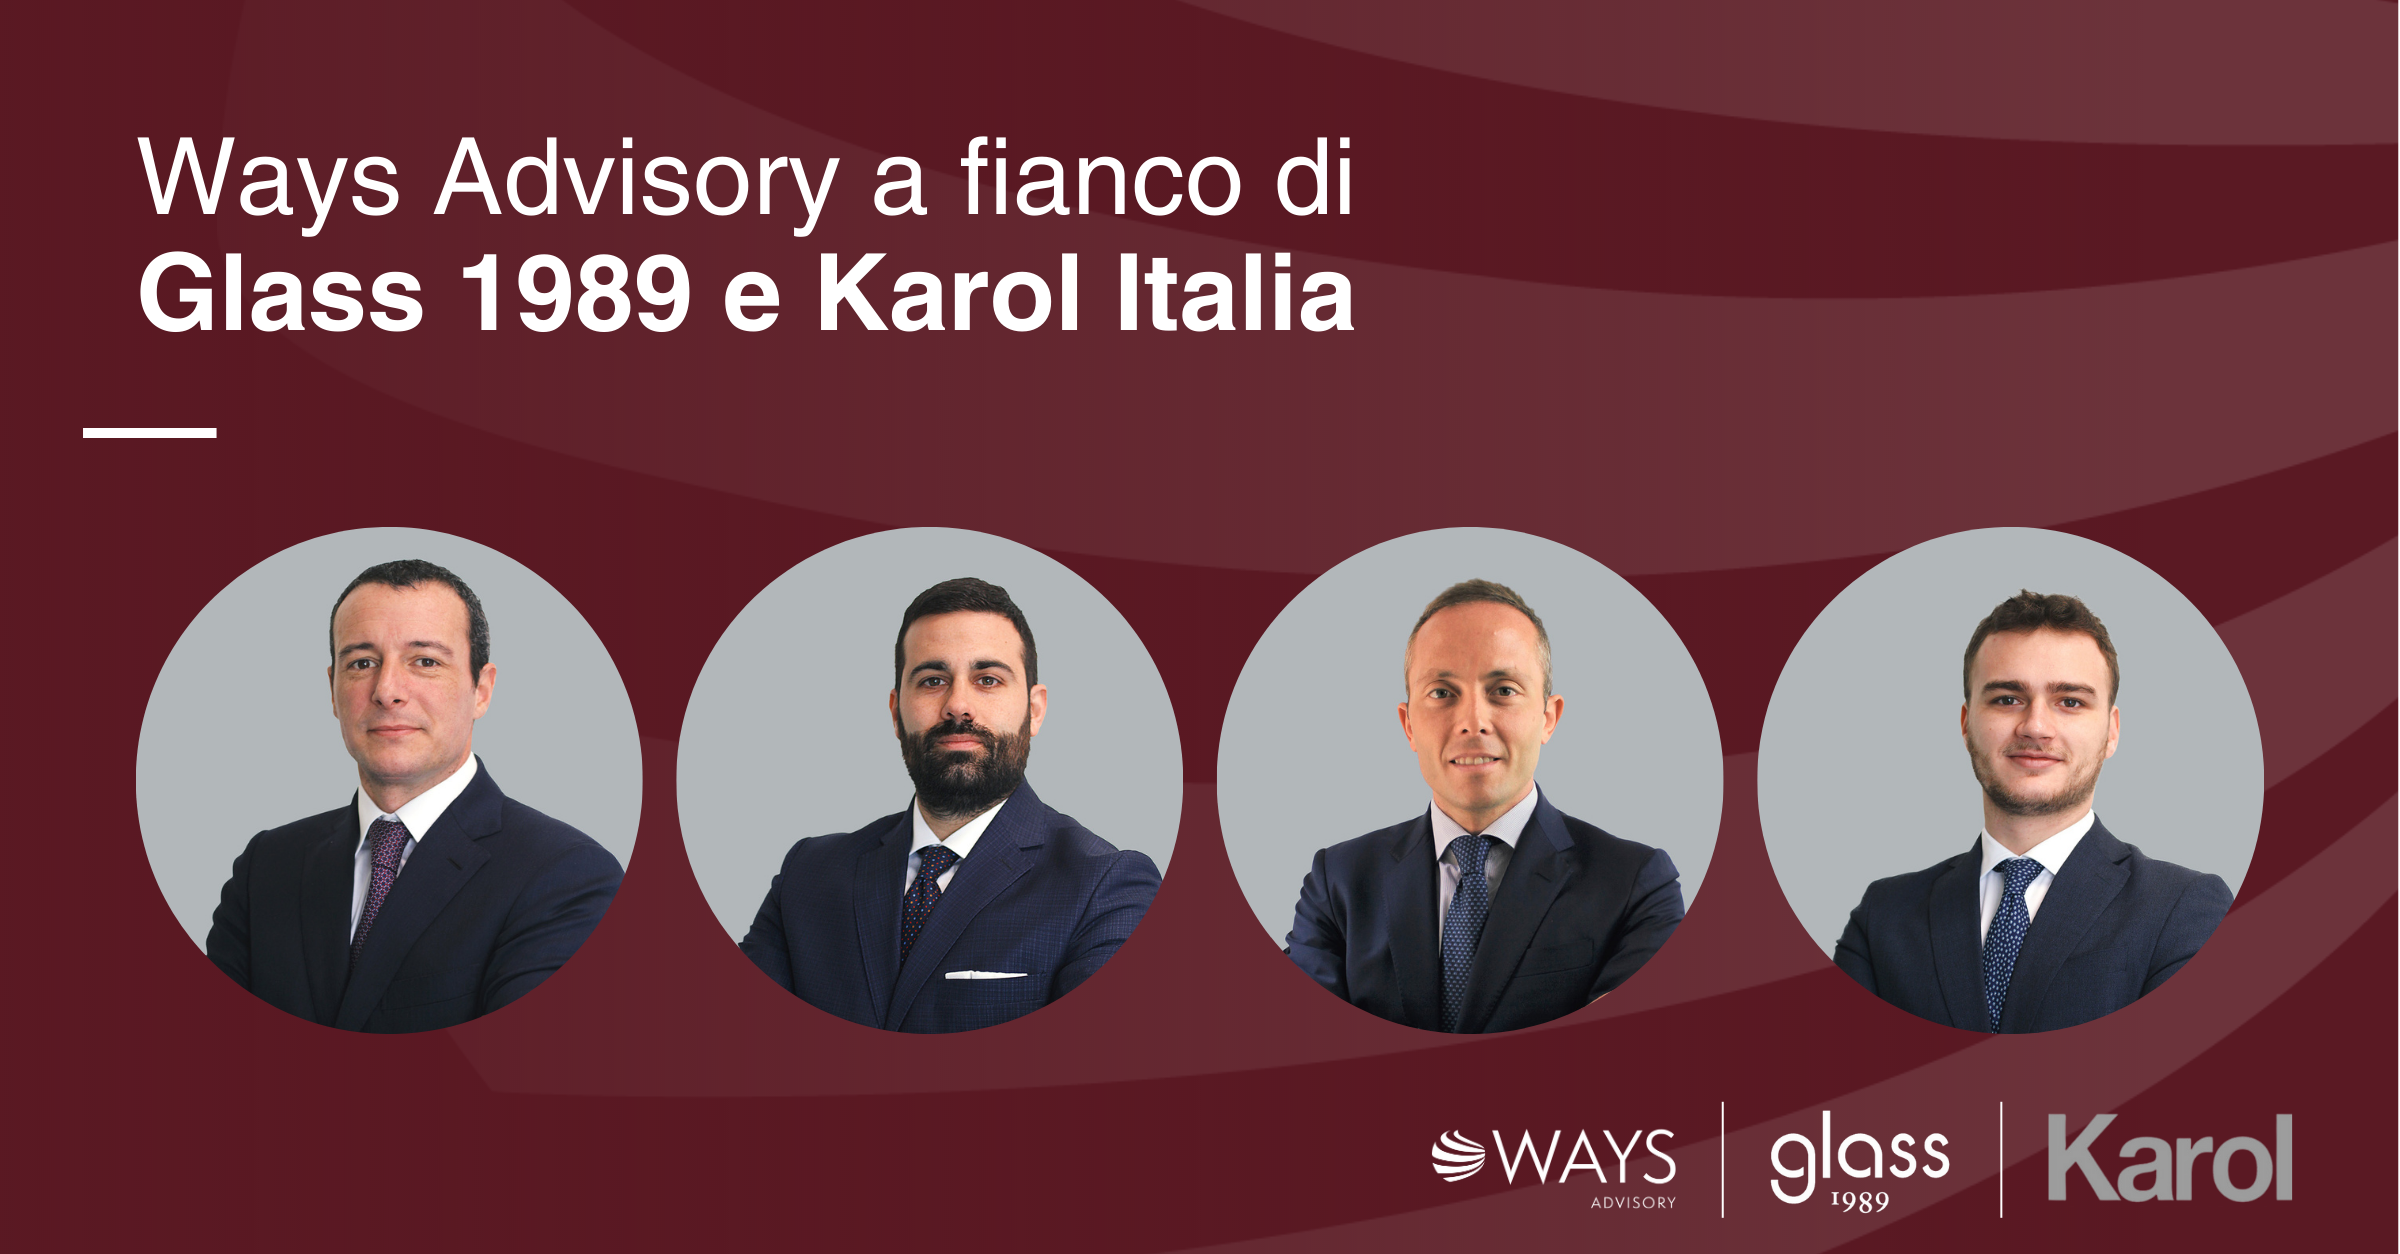 Ways Advisory supported Glass 1989 s.r.l. and Karol Italia as Financial Advisor